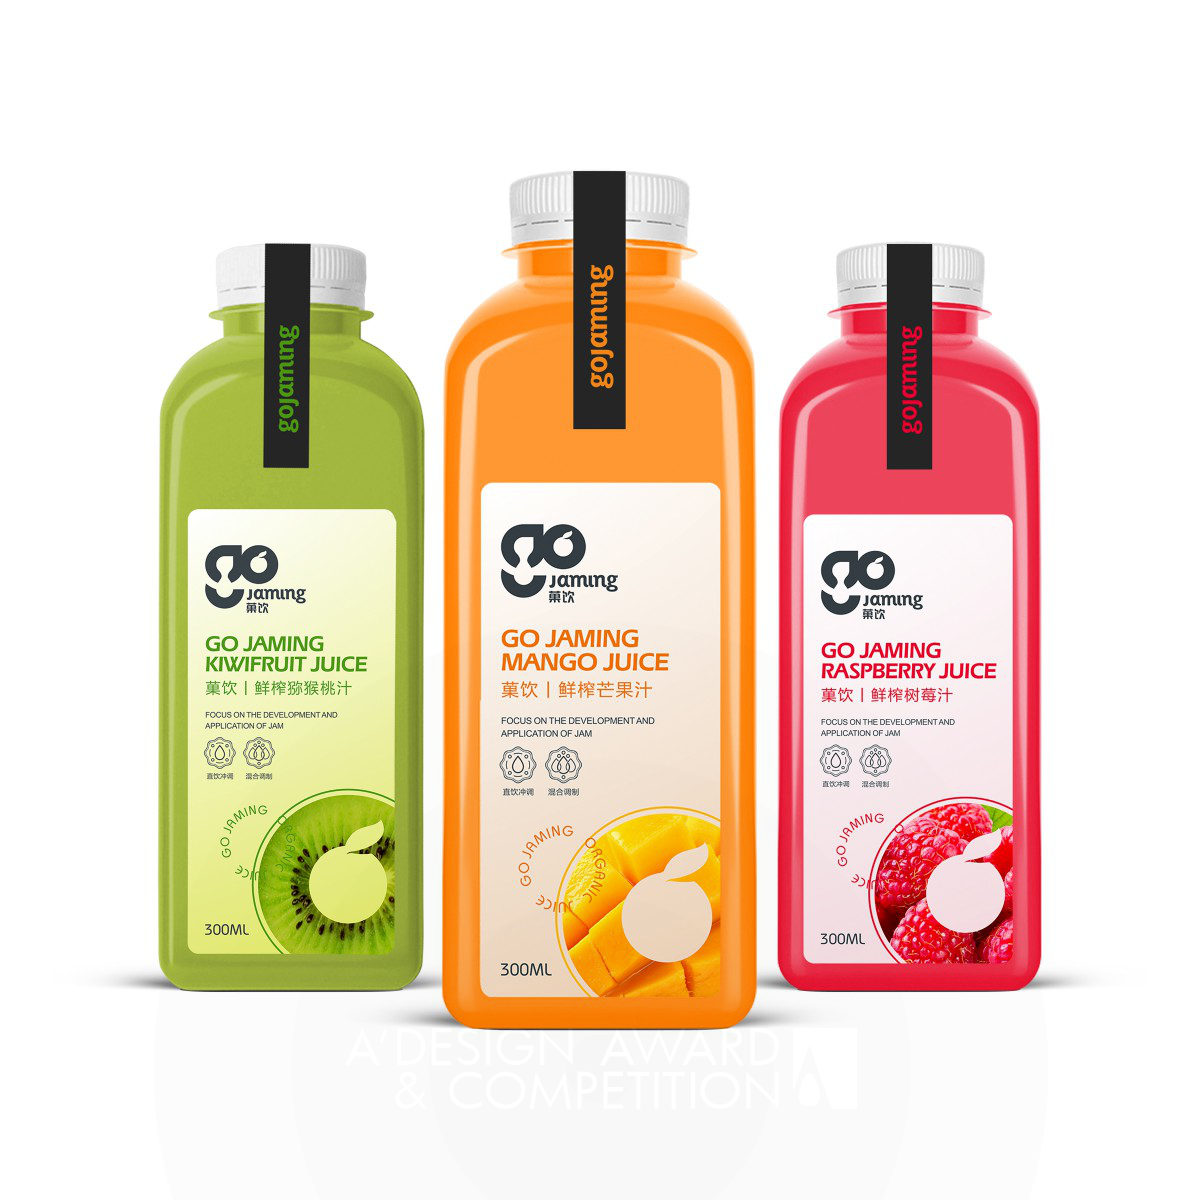 Gojaming Juice Packaging by Qichao An